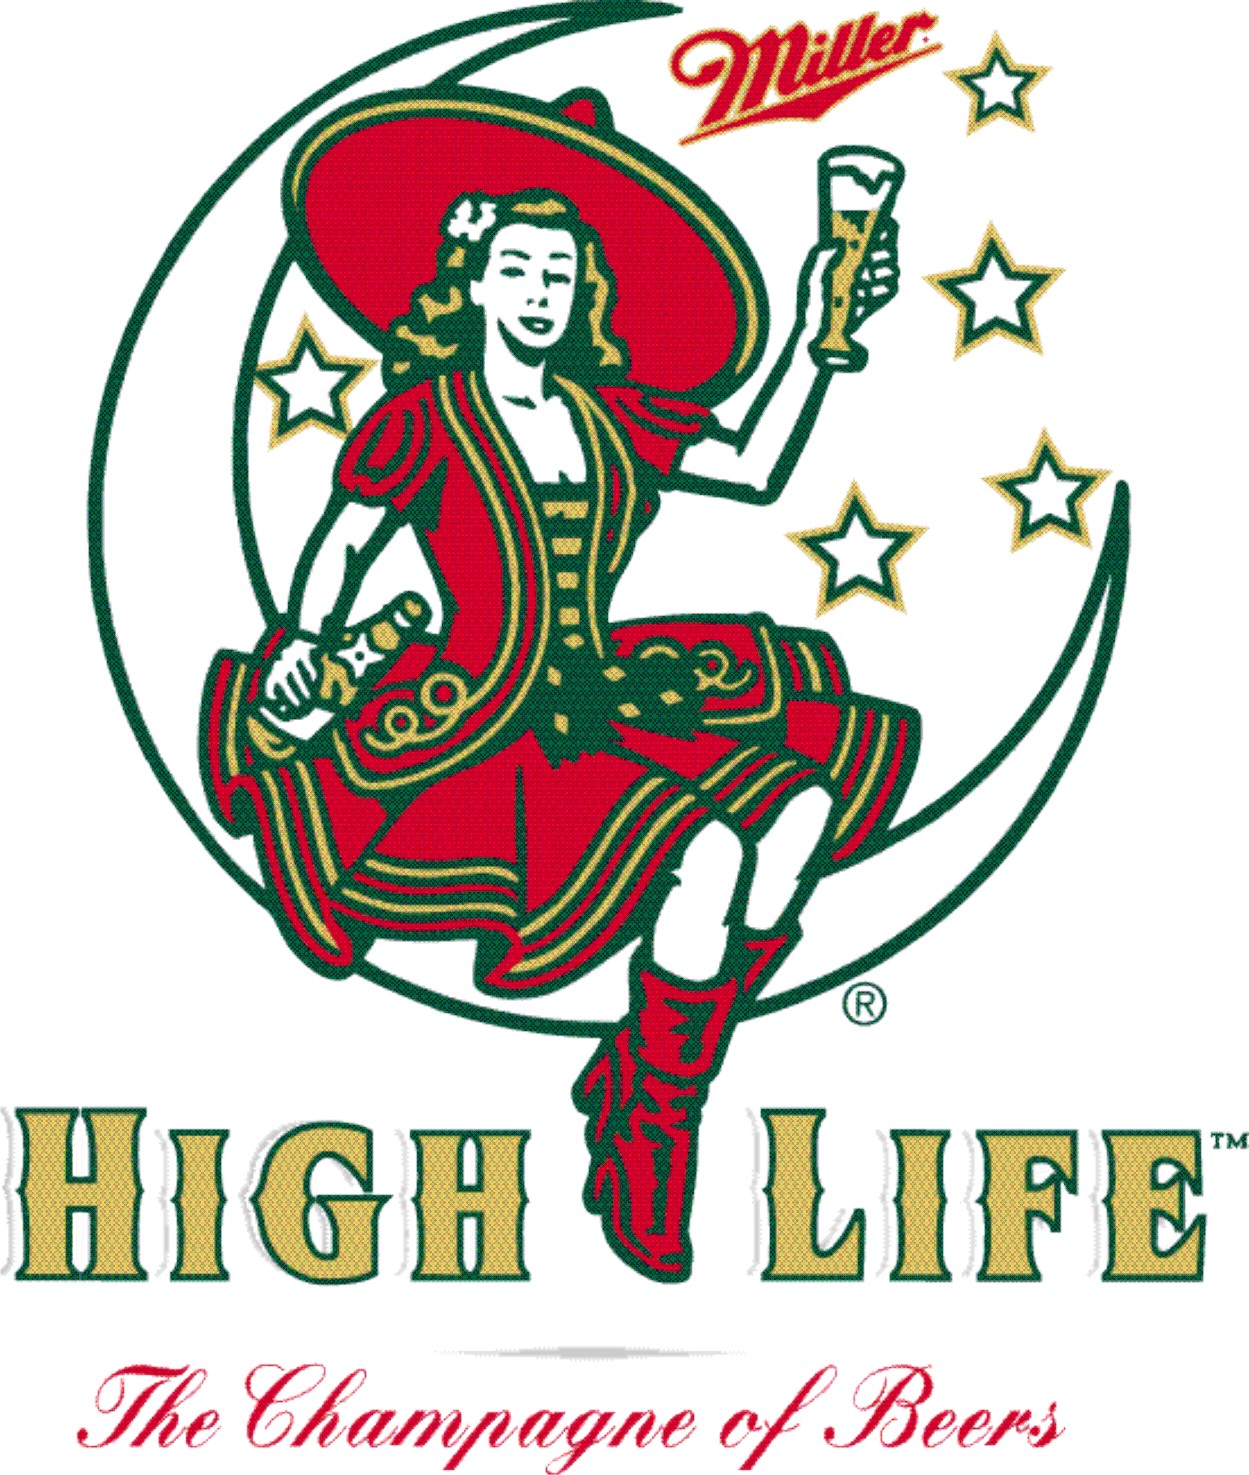 The High Life [1960]